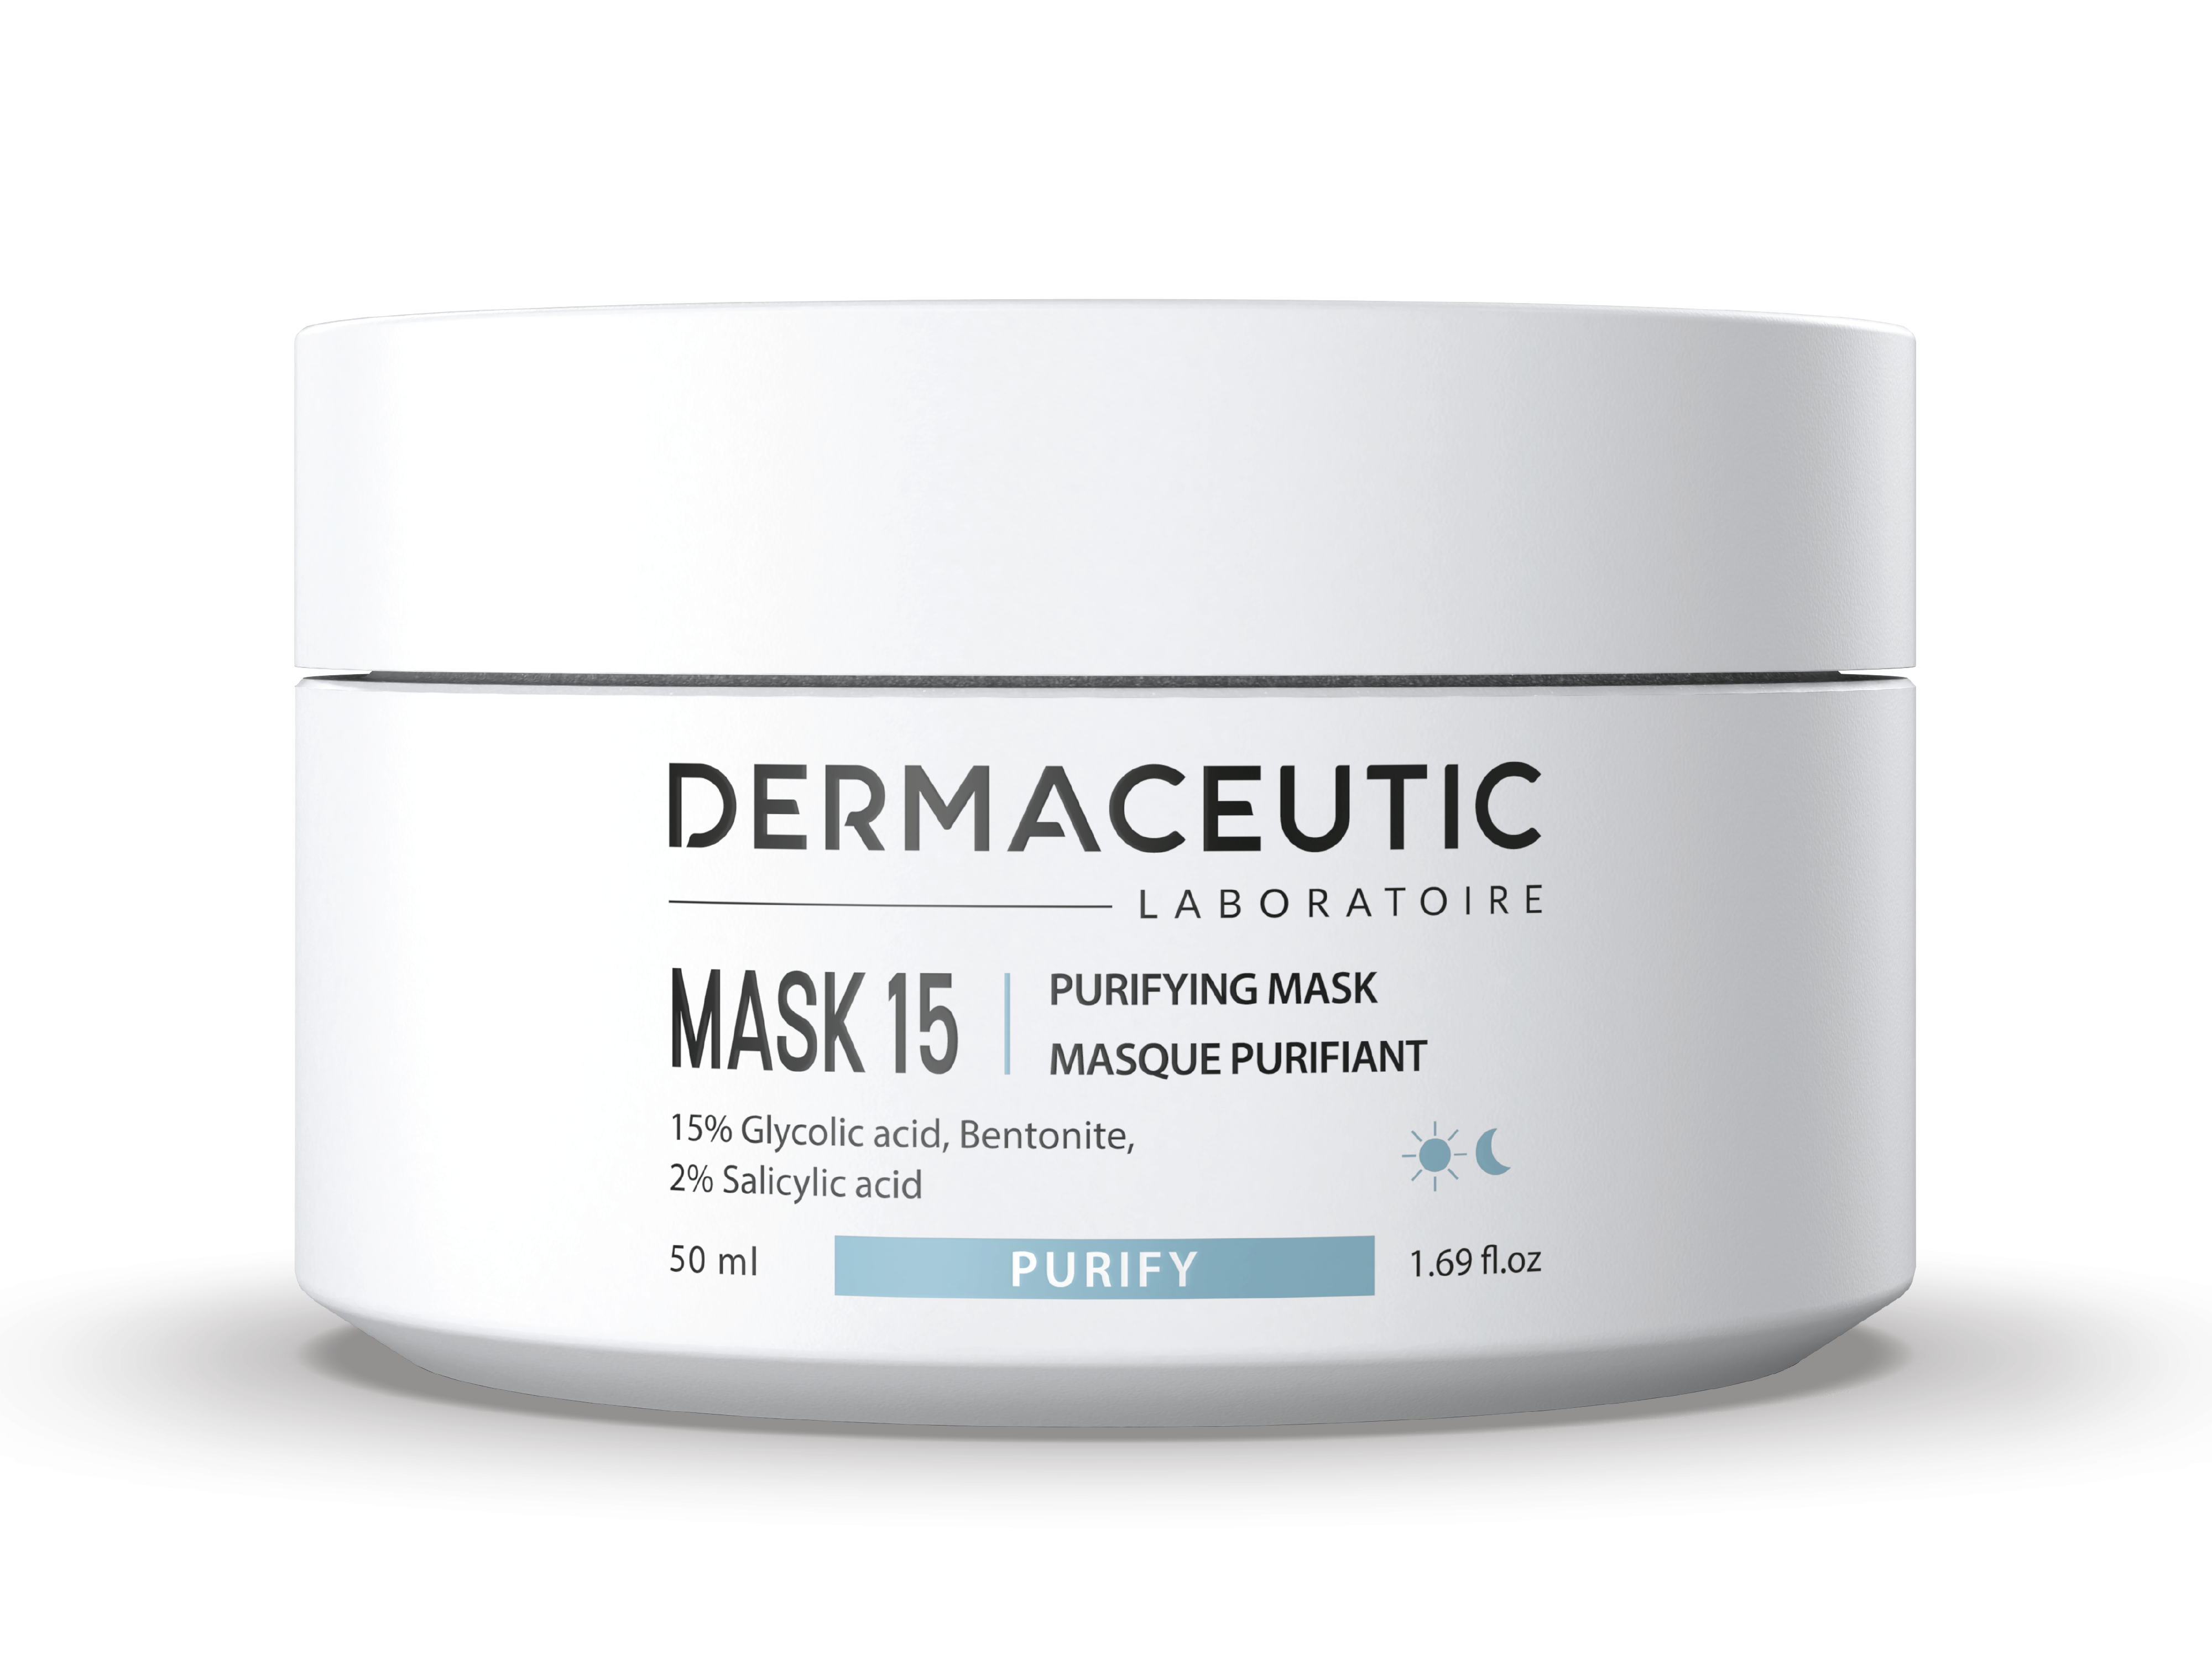 Dermaceutic Mask 15 Purifying Mask, 50 ml